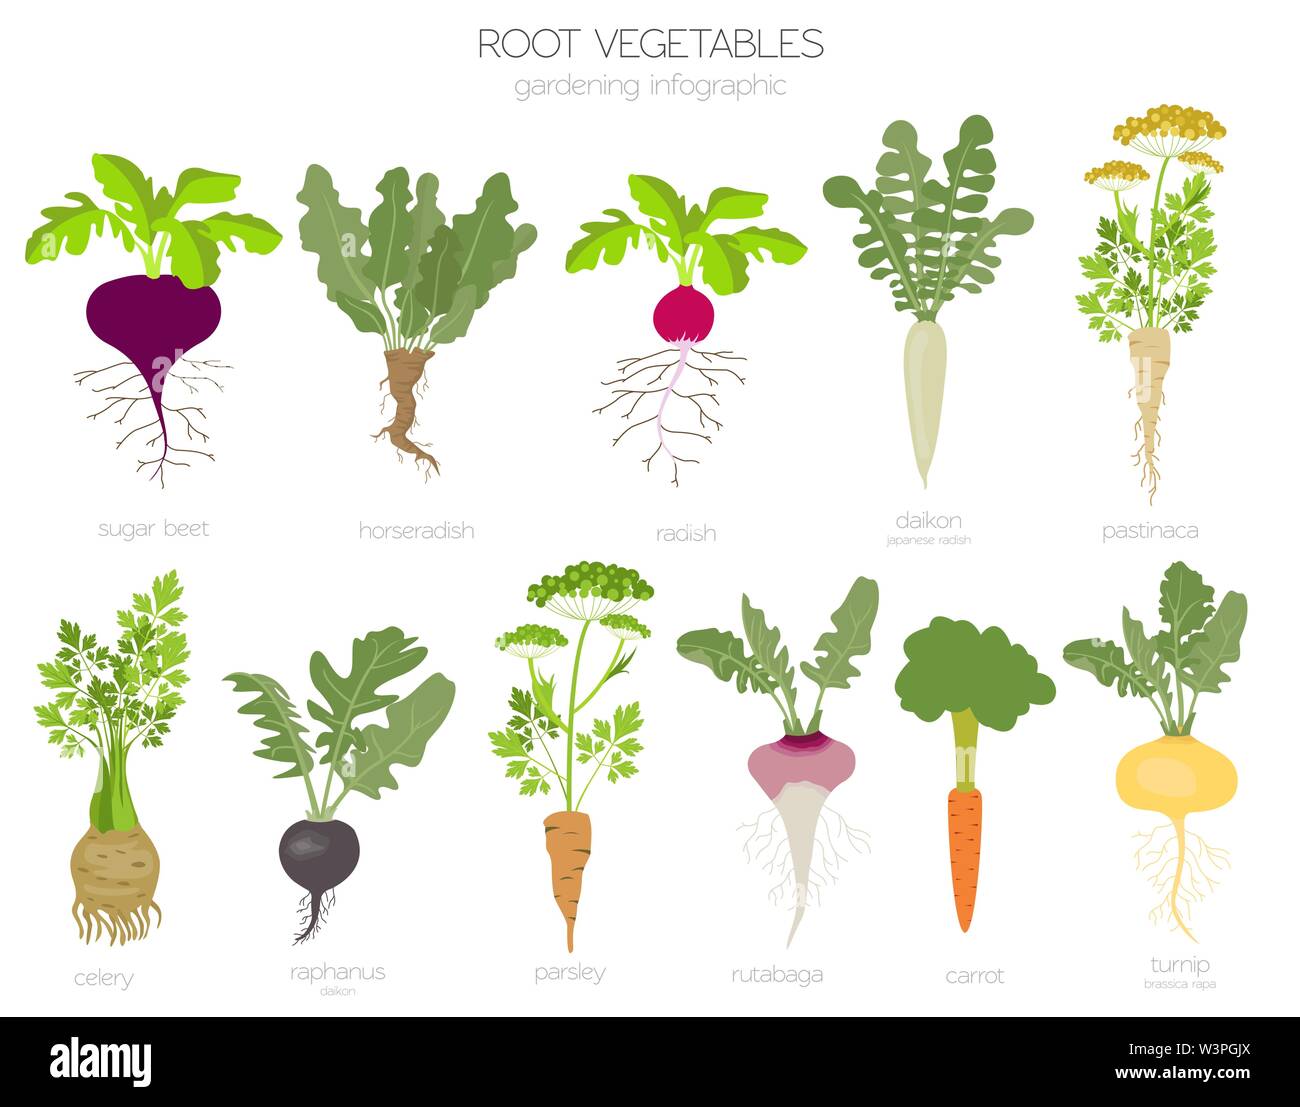 Root vegetables raphanus, radish, sugar beet, carrot, parsley etc. Gardening, farming infographic, how it grows. Flat style design. Vector illustratio Stock Vector